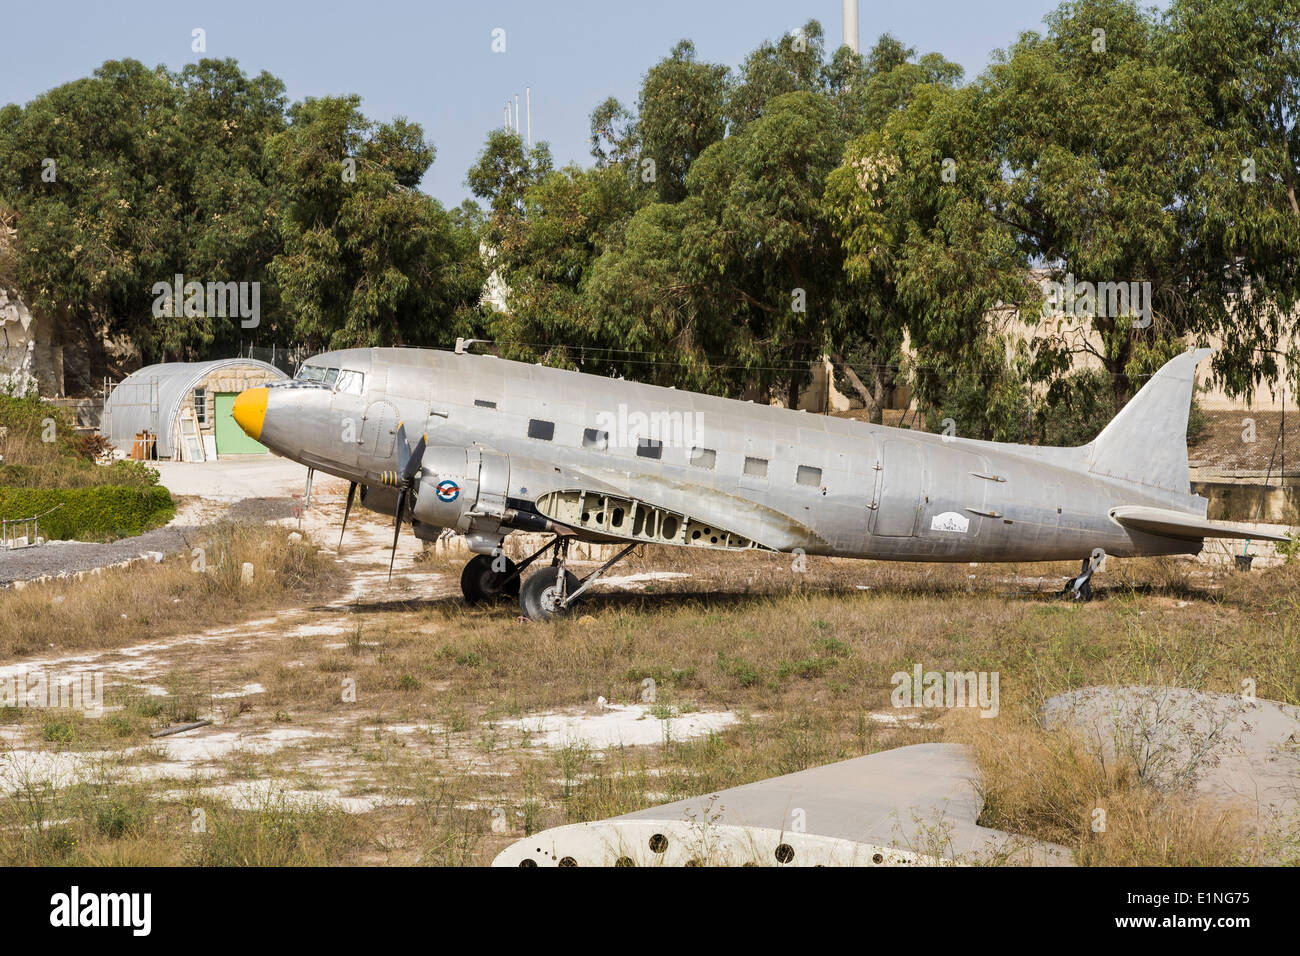 Silver Dakota Douglas DC-3 aircraft with detached wing, in need of restoration, at Malta Aviation Museum, Mdina, Malta Stock Photo